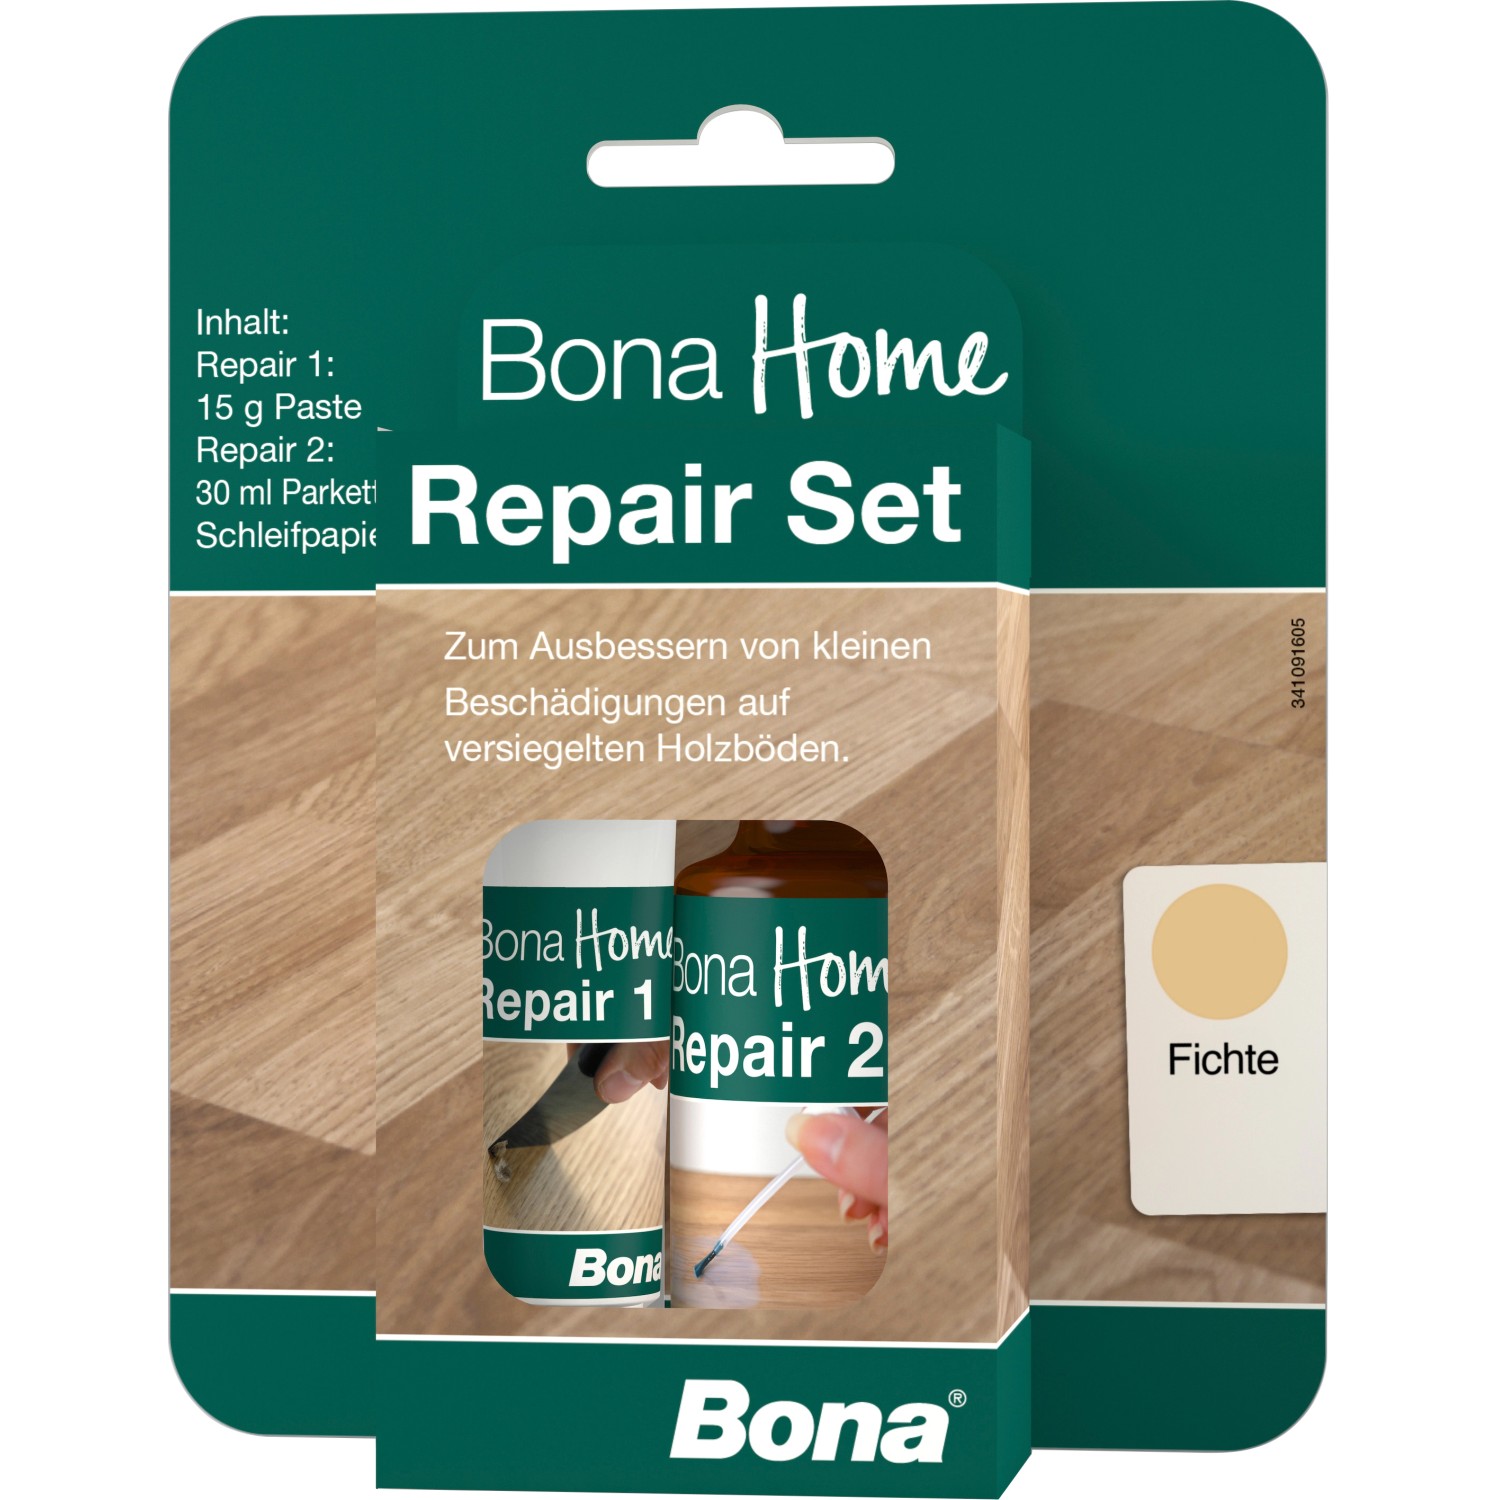 Bona Home Repair Set Fichte von Bona